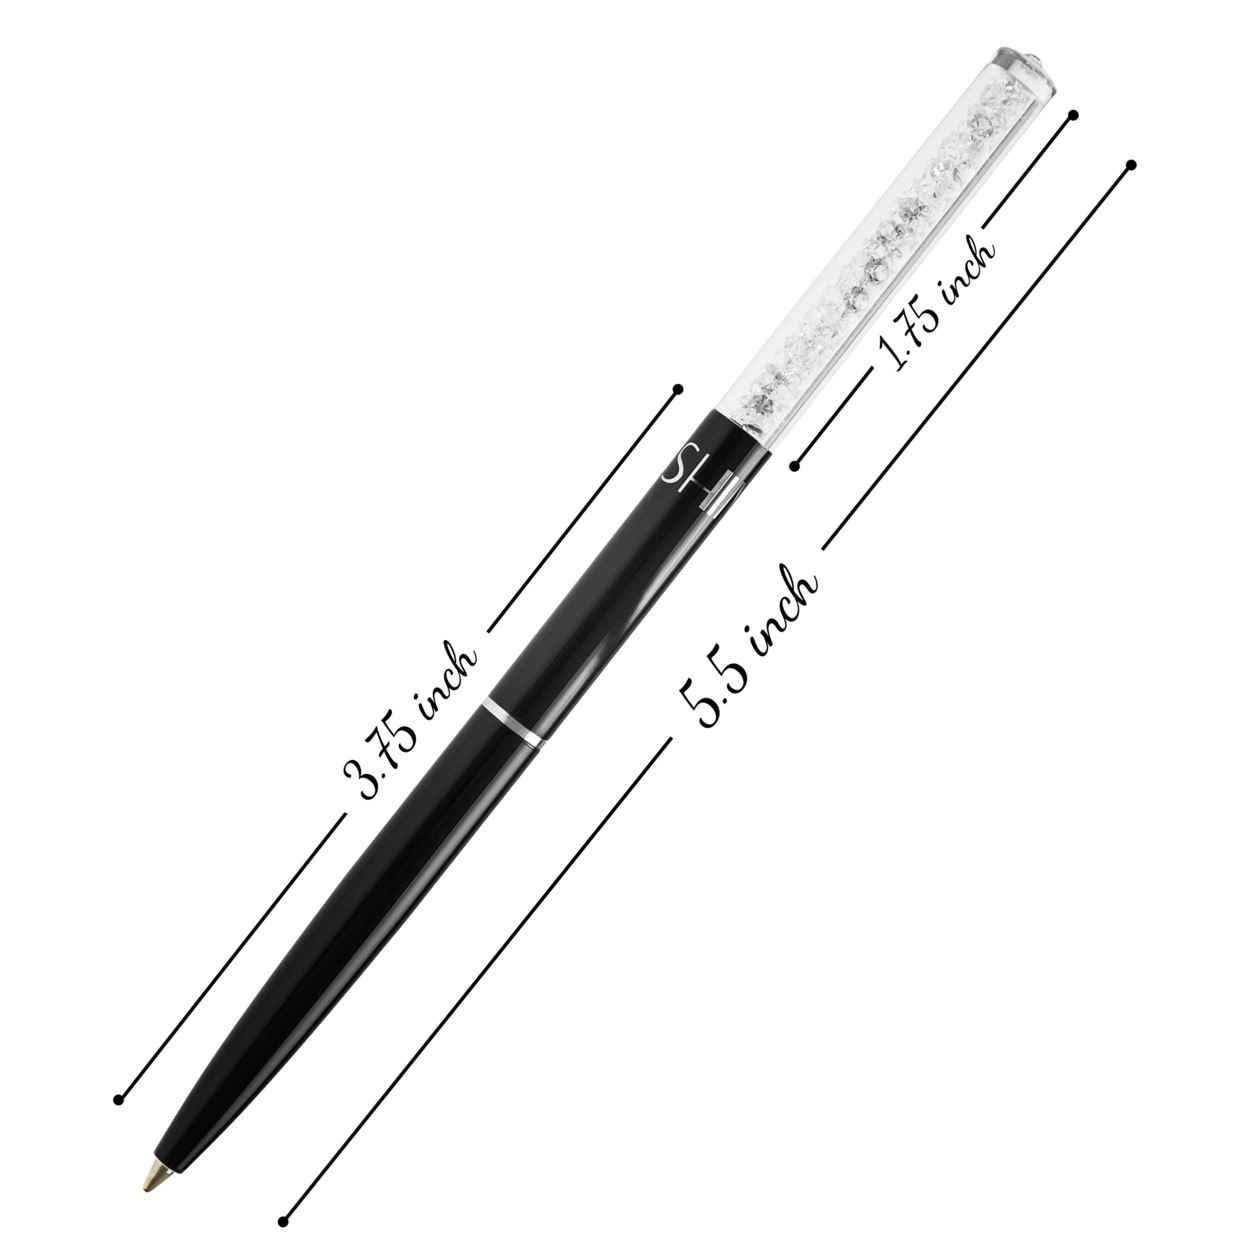 Matashi Black Chrome Plated Stylish Ballpoint Pen With A Miniature Crystalline Top Gift For Christmas Birthday Gift For Boss Teacher